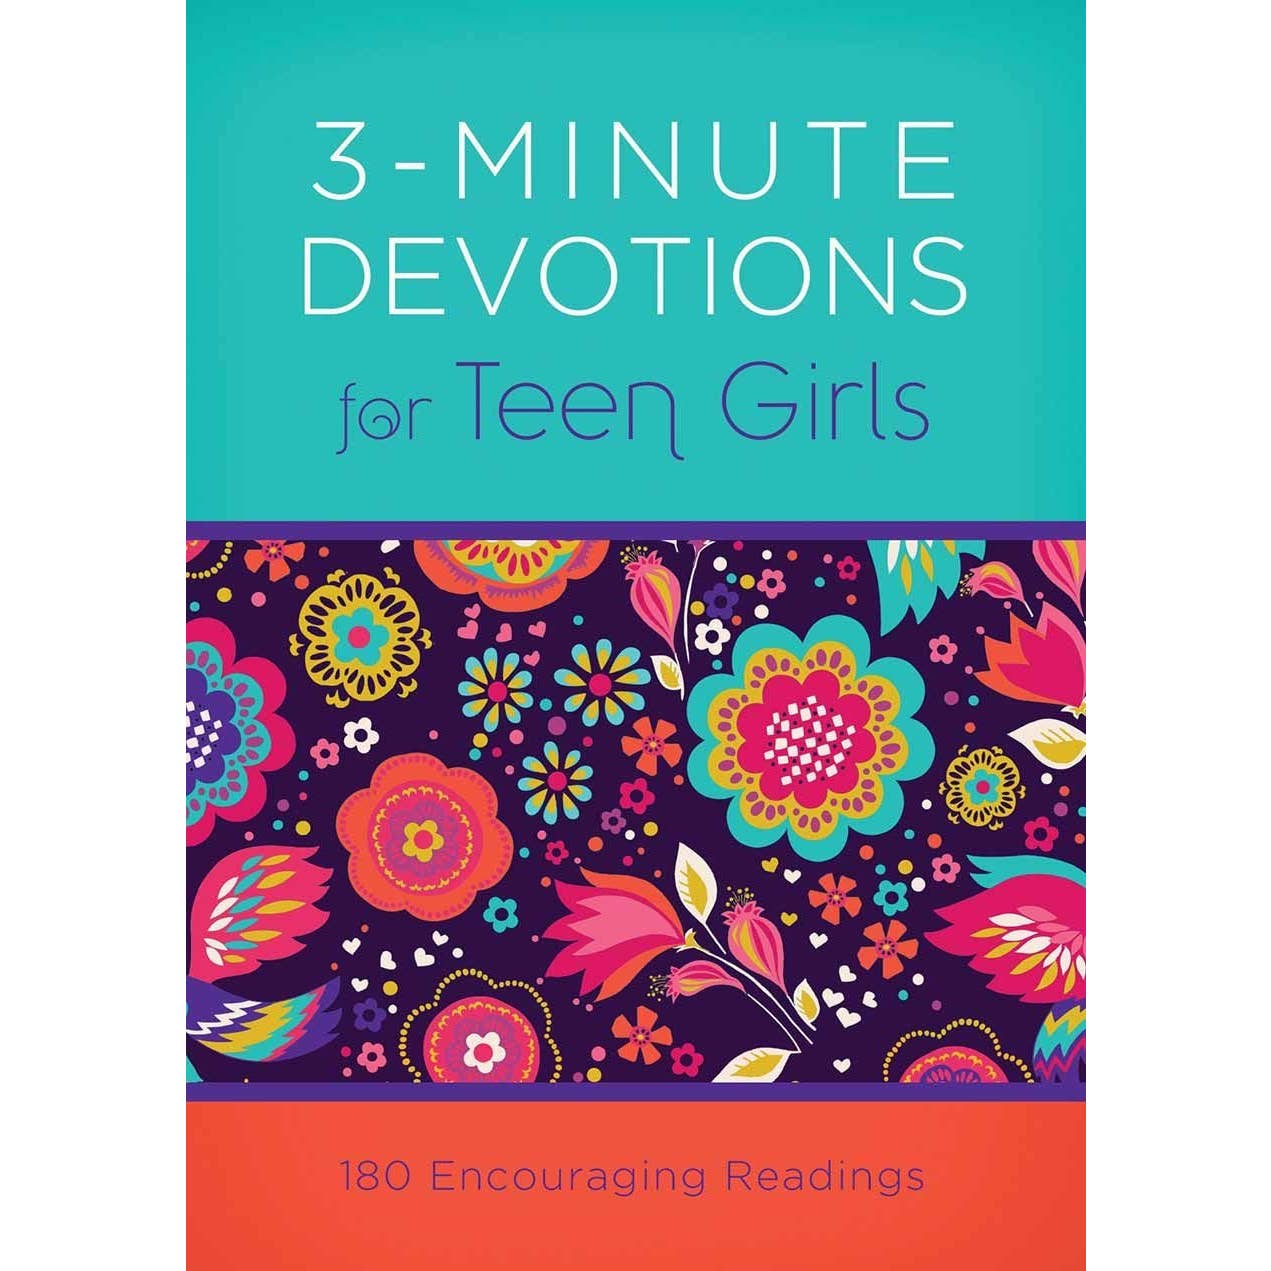 3 Minute Devotions for Teen Girls